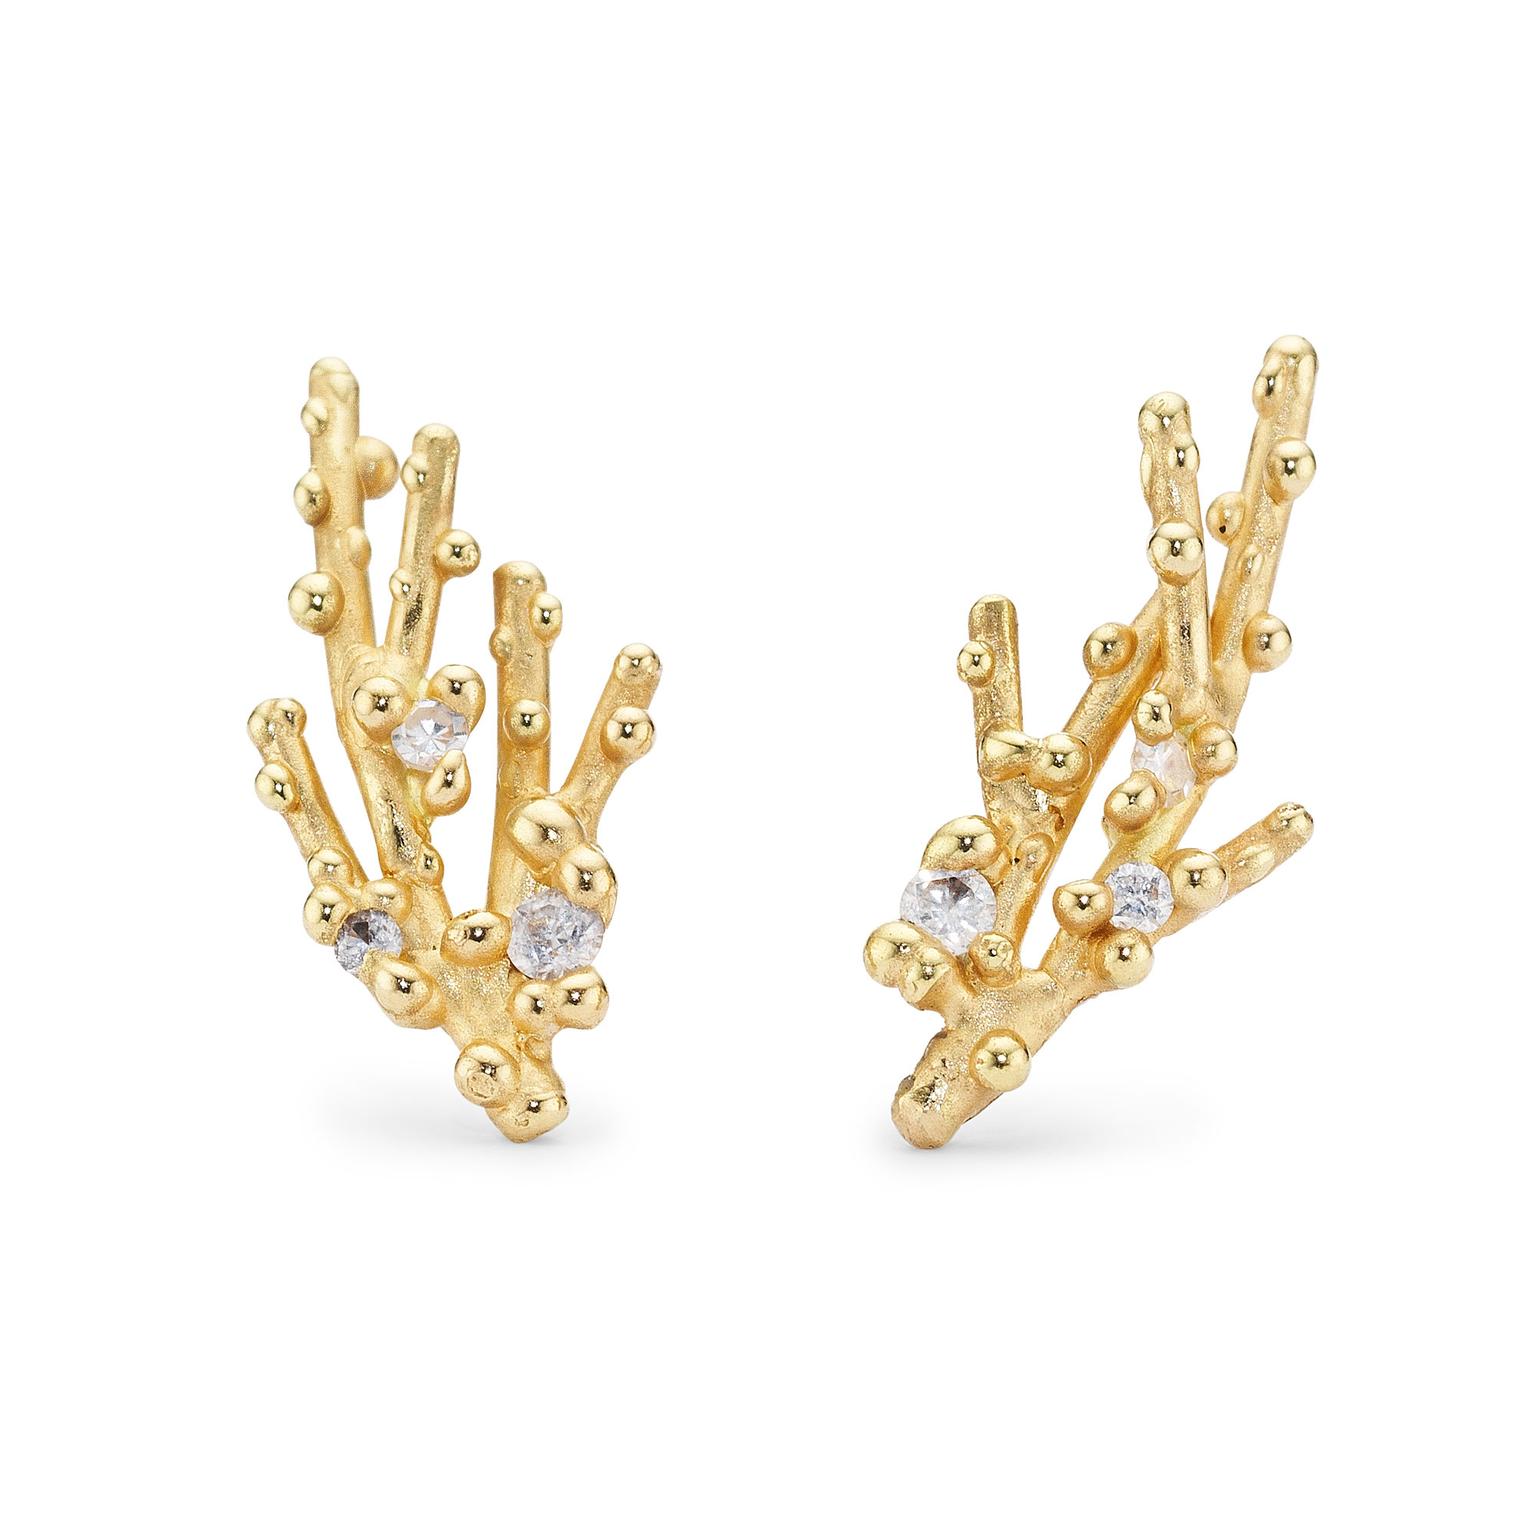 Ruth Tomlinson diamond earrings